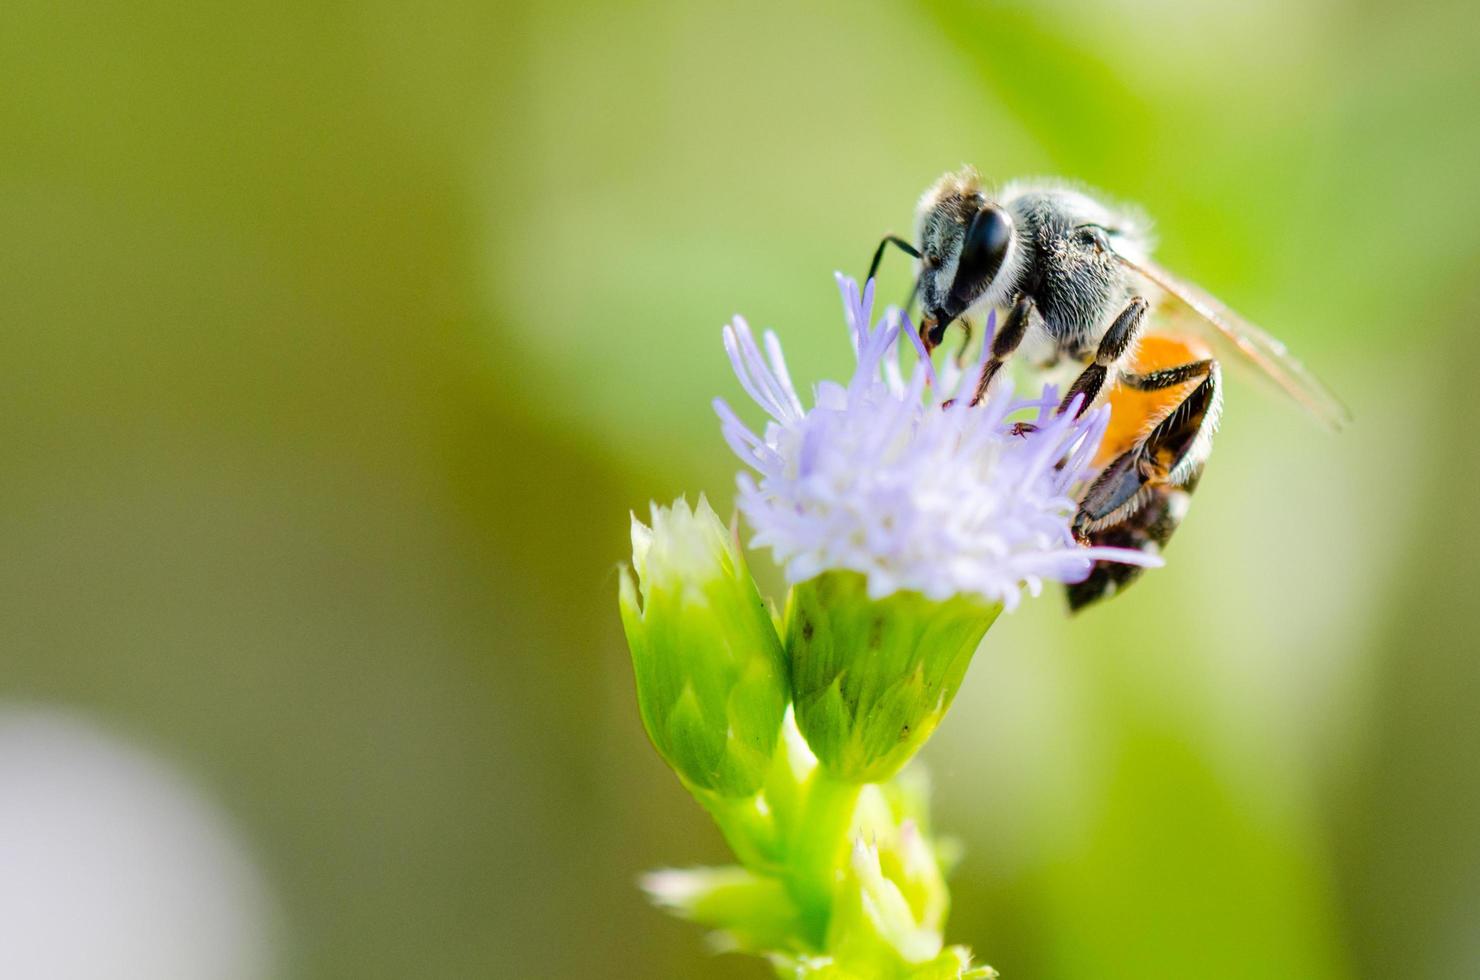 små bi äter nektar på blomma av get ogräs foto